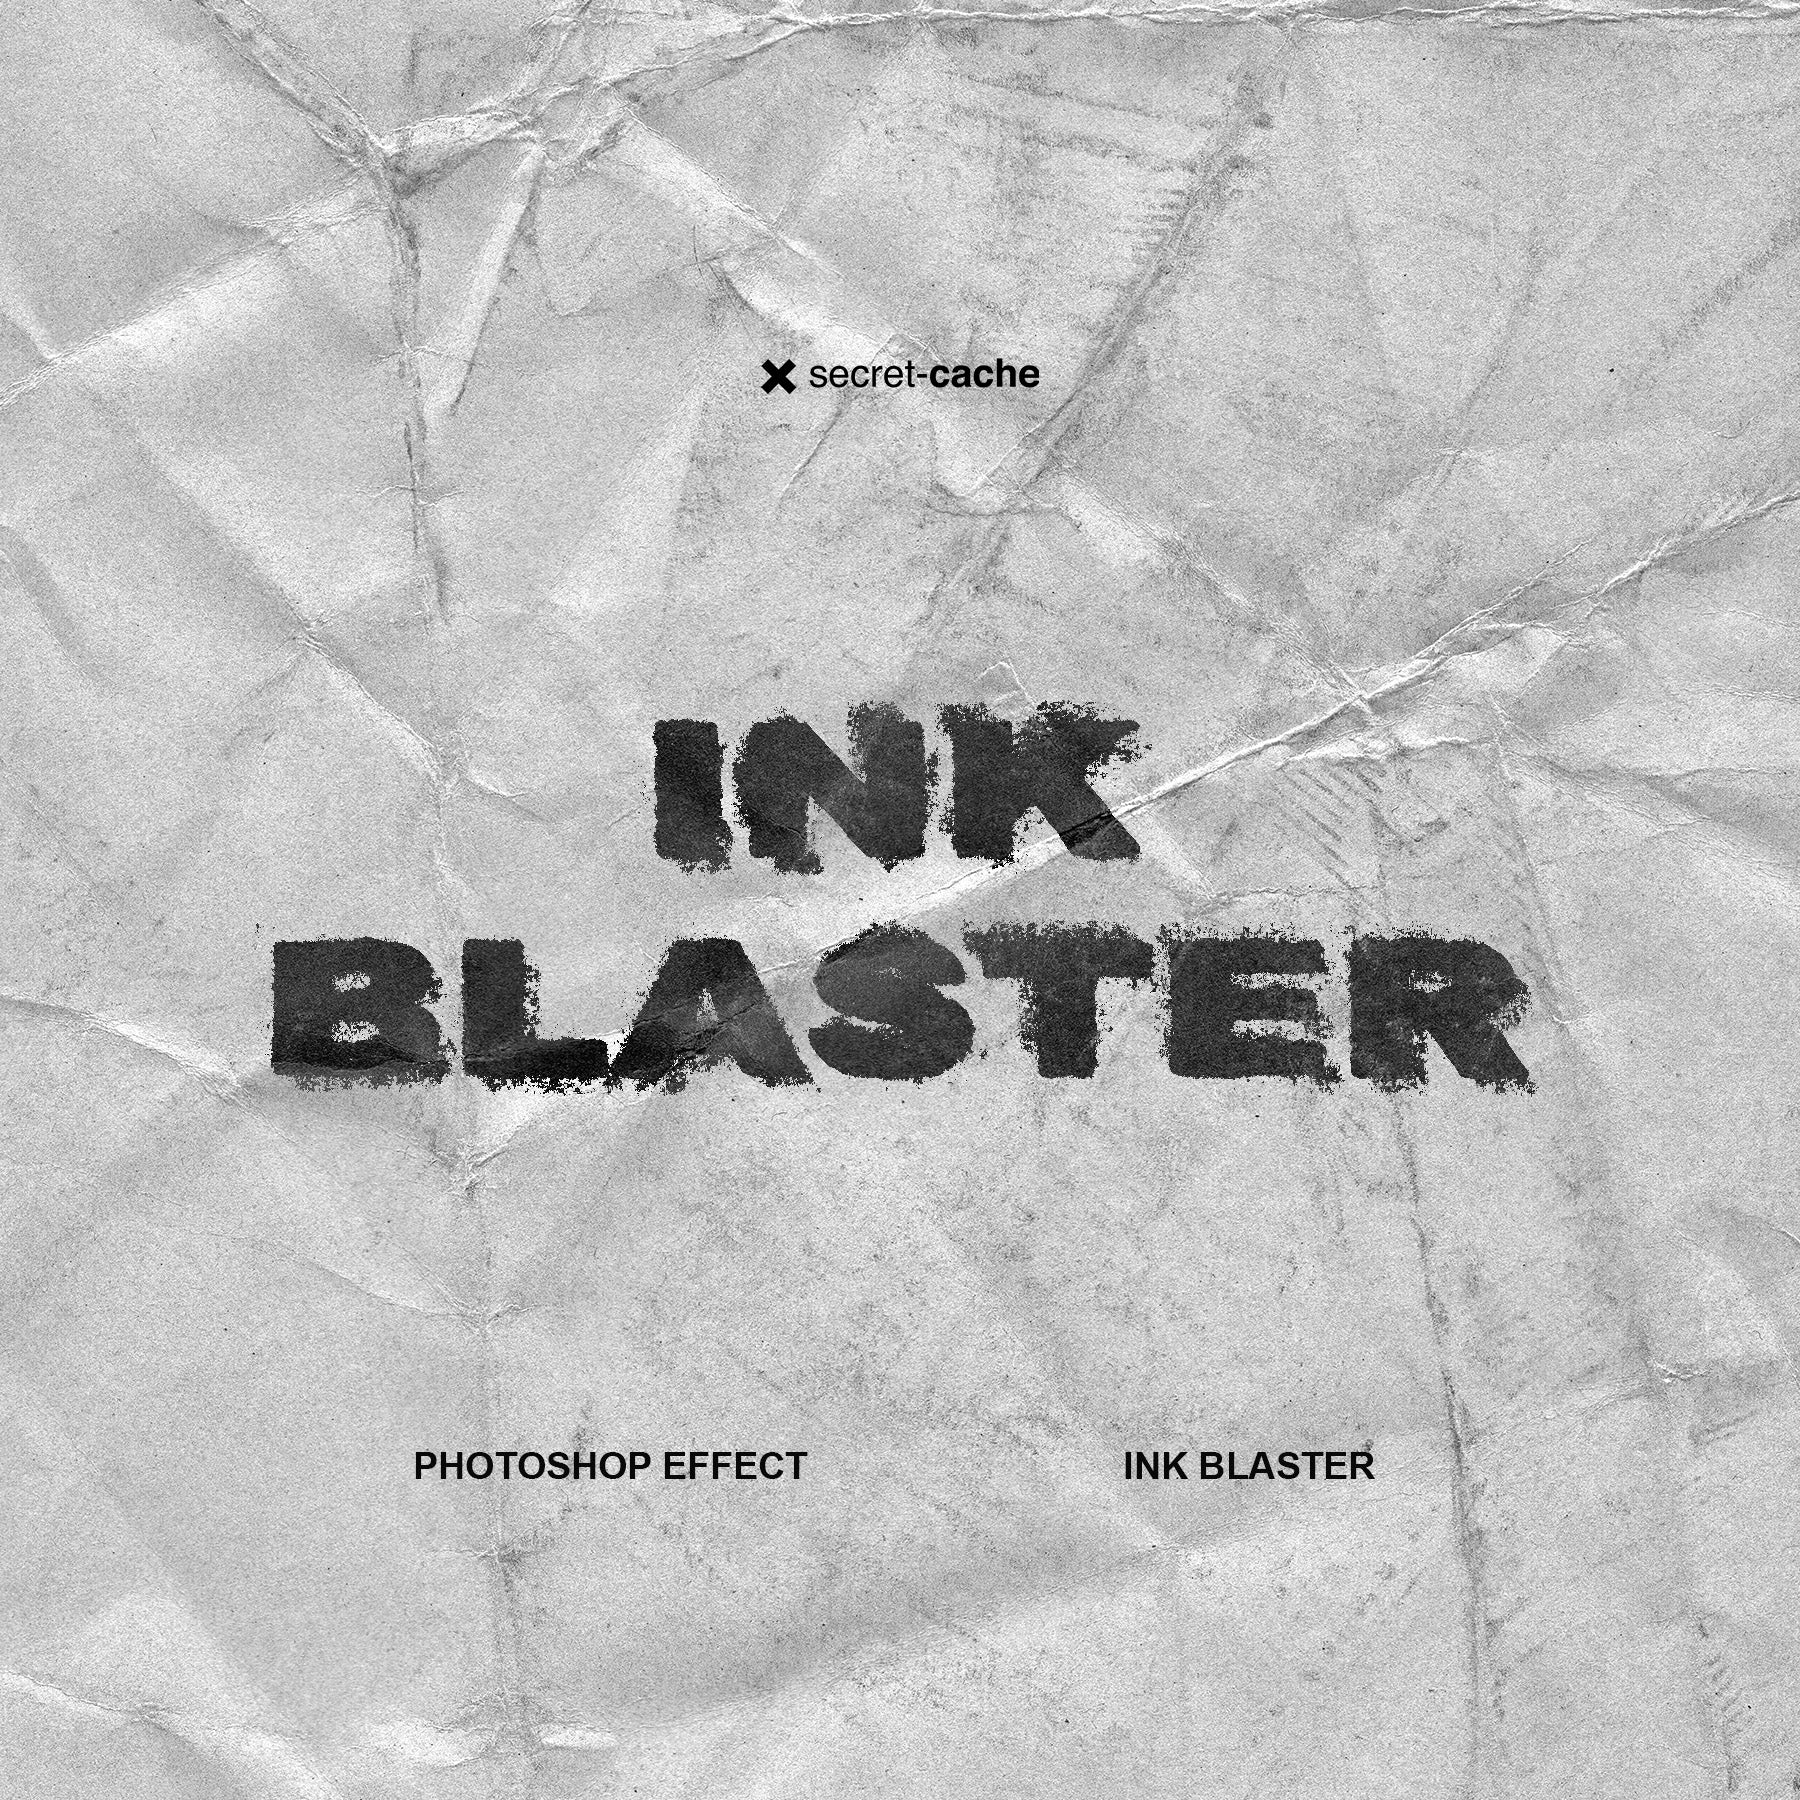 Ink Blaster